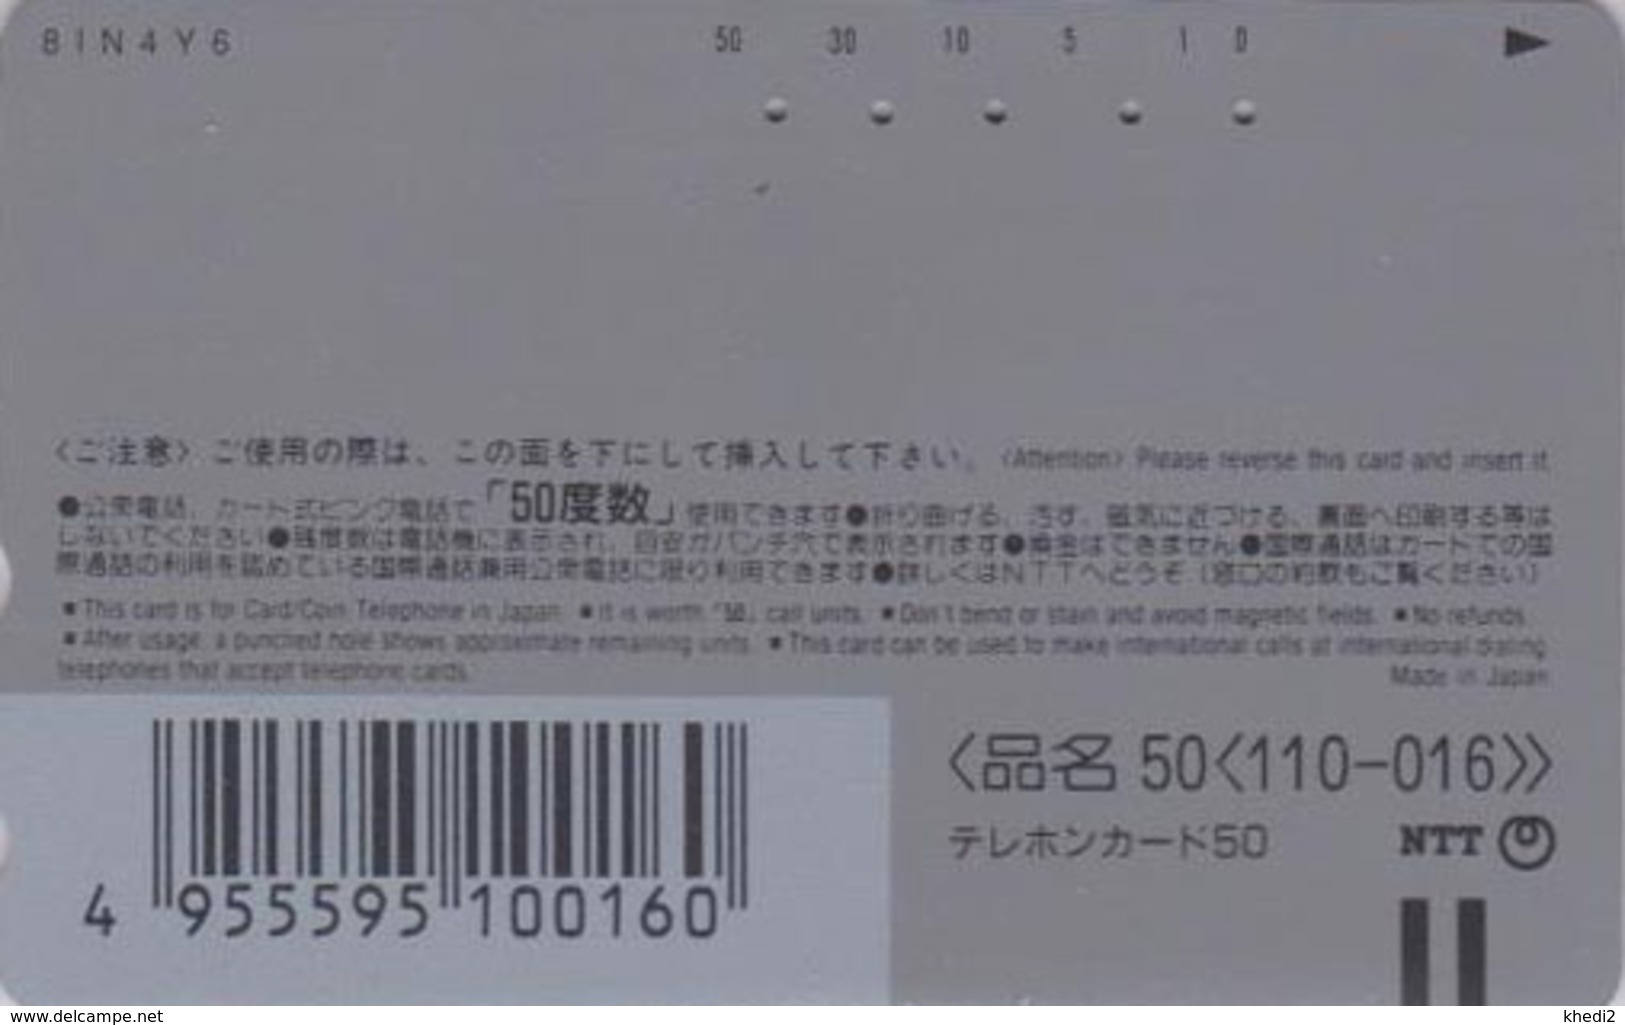 Telecarte Japon / 110-016 - DISNEY ON ICE - TOY STORY - Space 2 - JAPAN Movie Phonecard - Disney